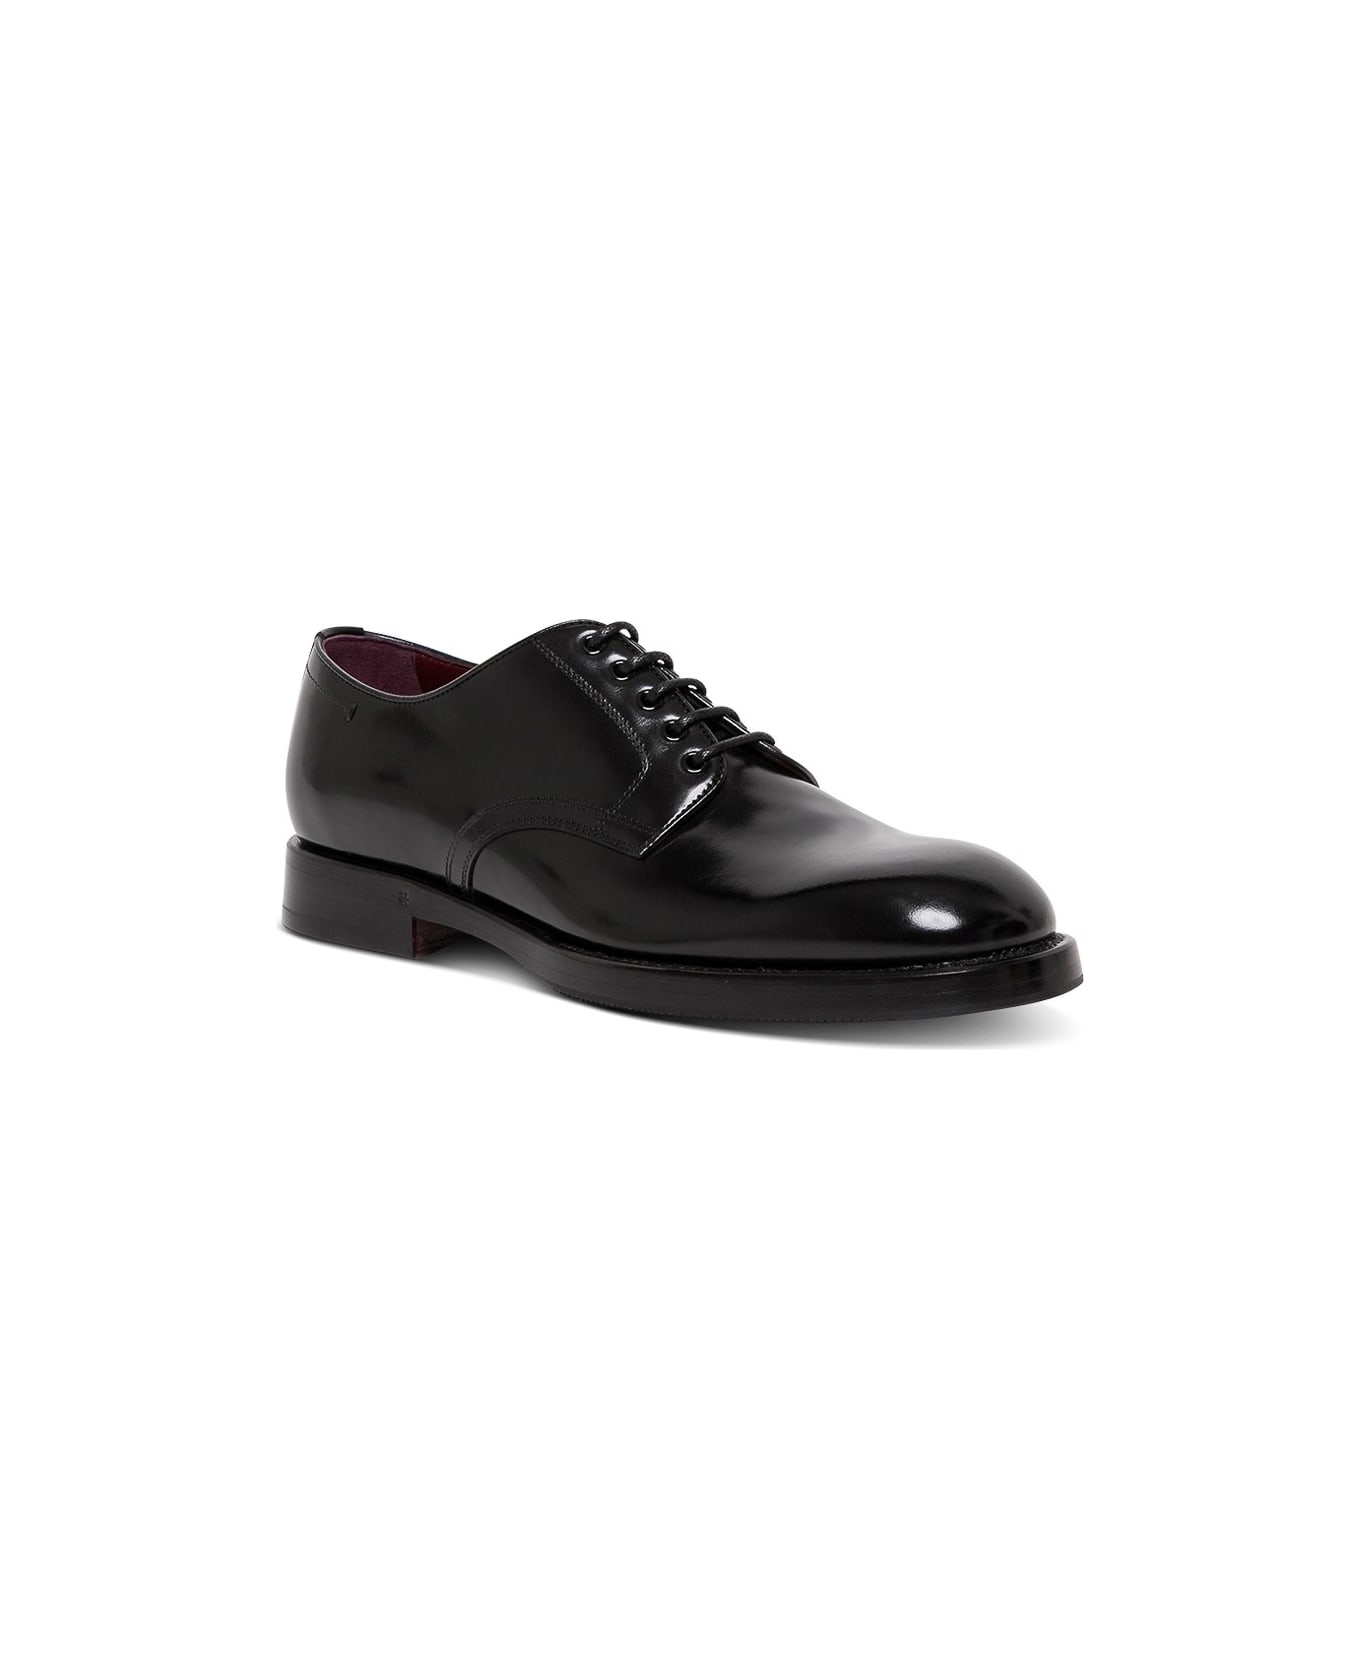 Dolce & Gabbana Black Leather Lace-up Shoes - Black